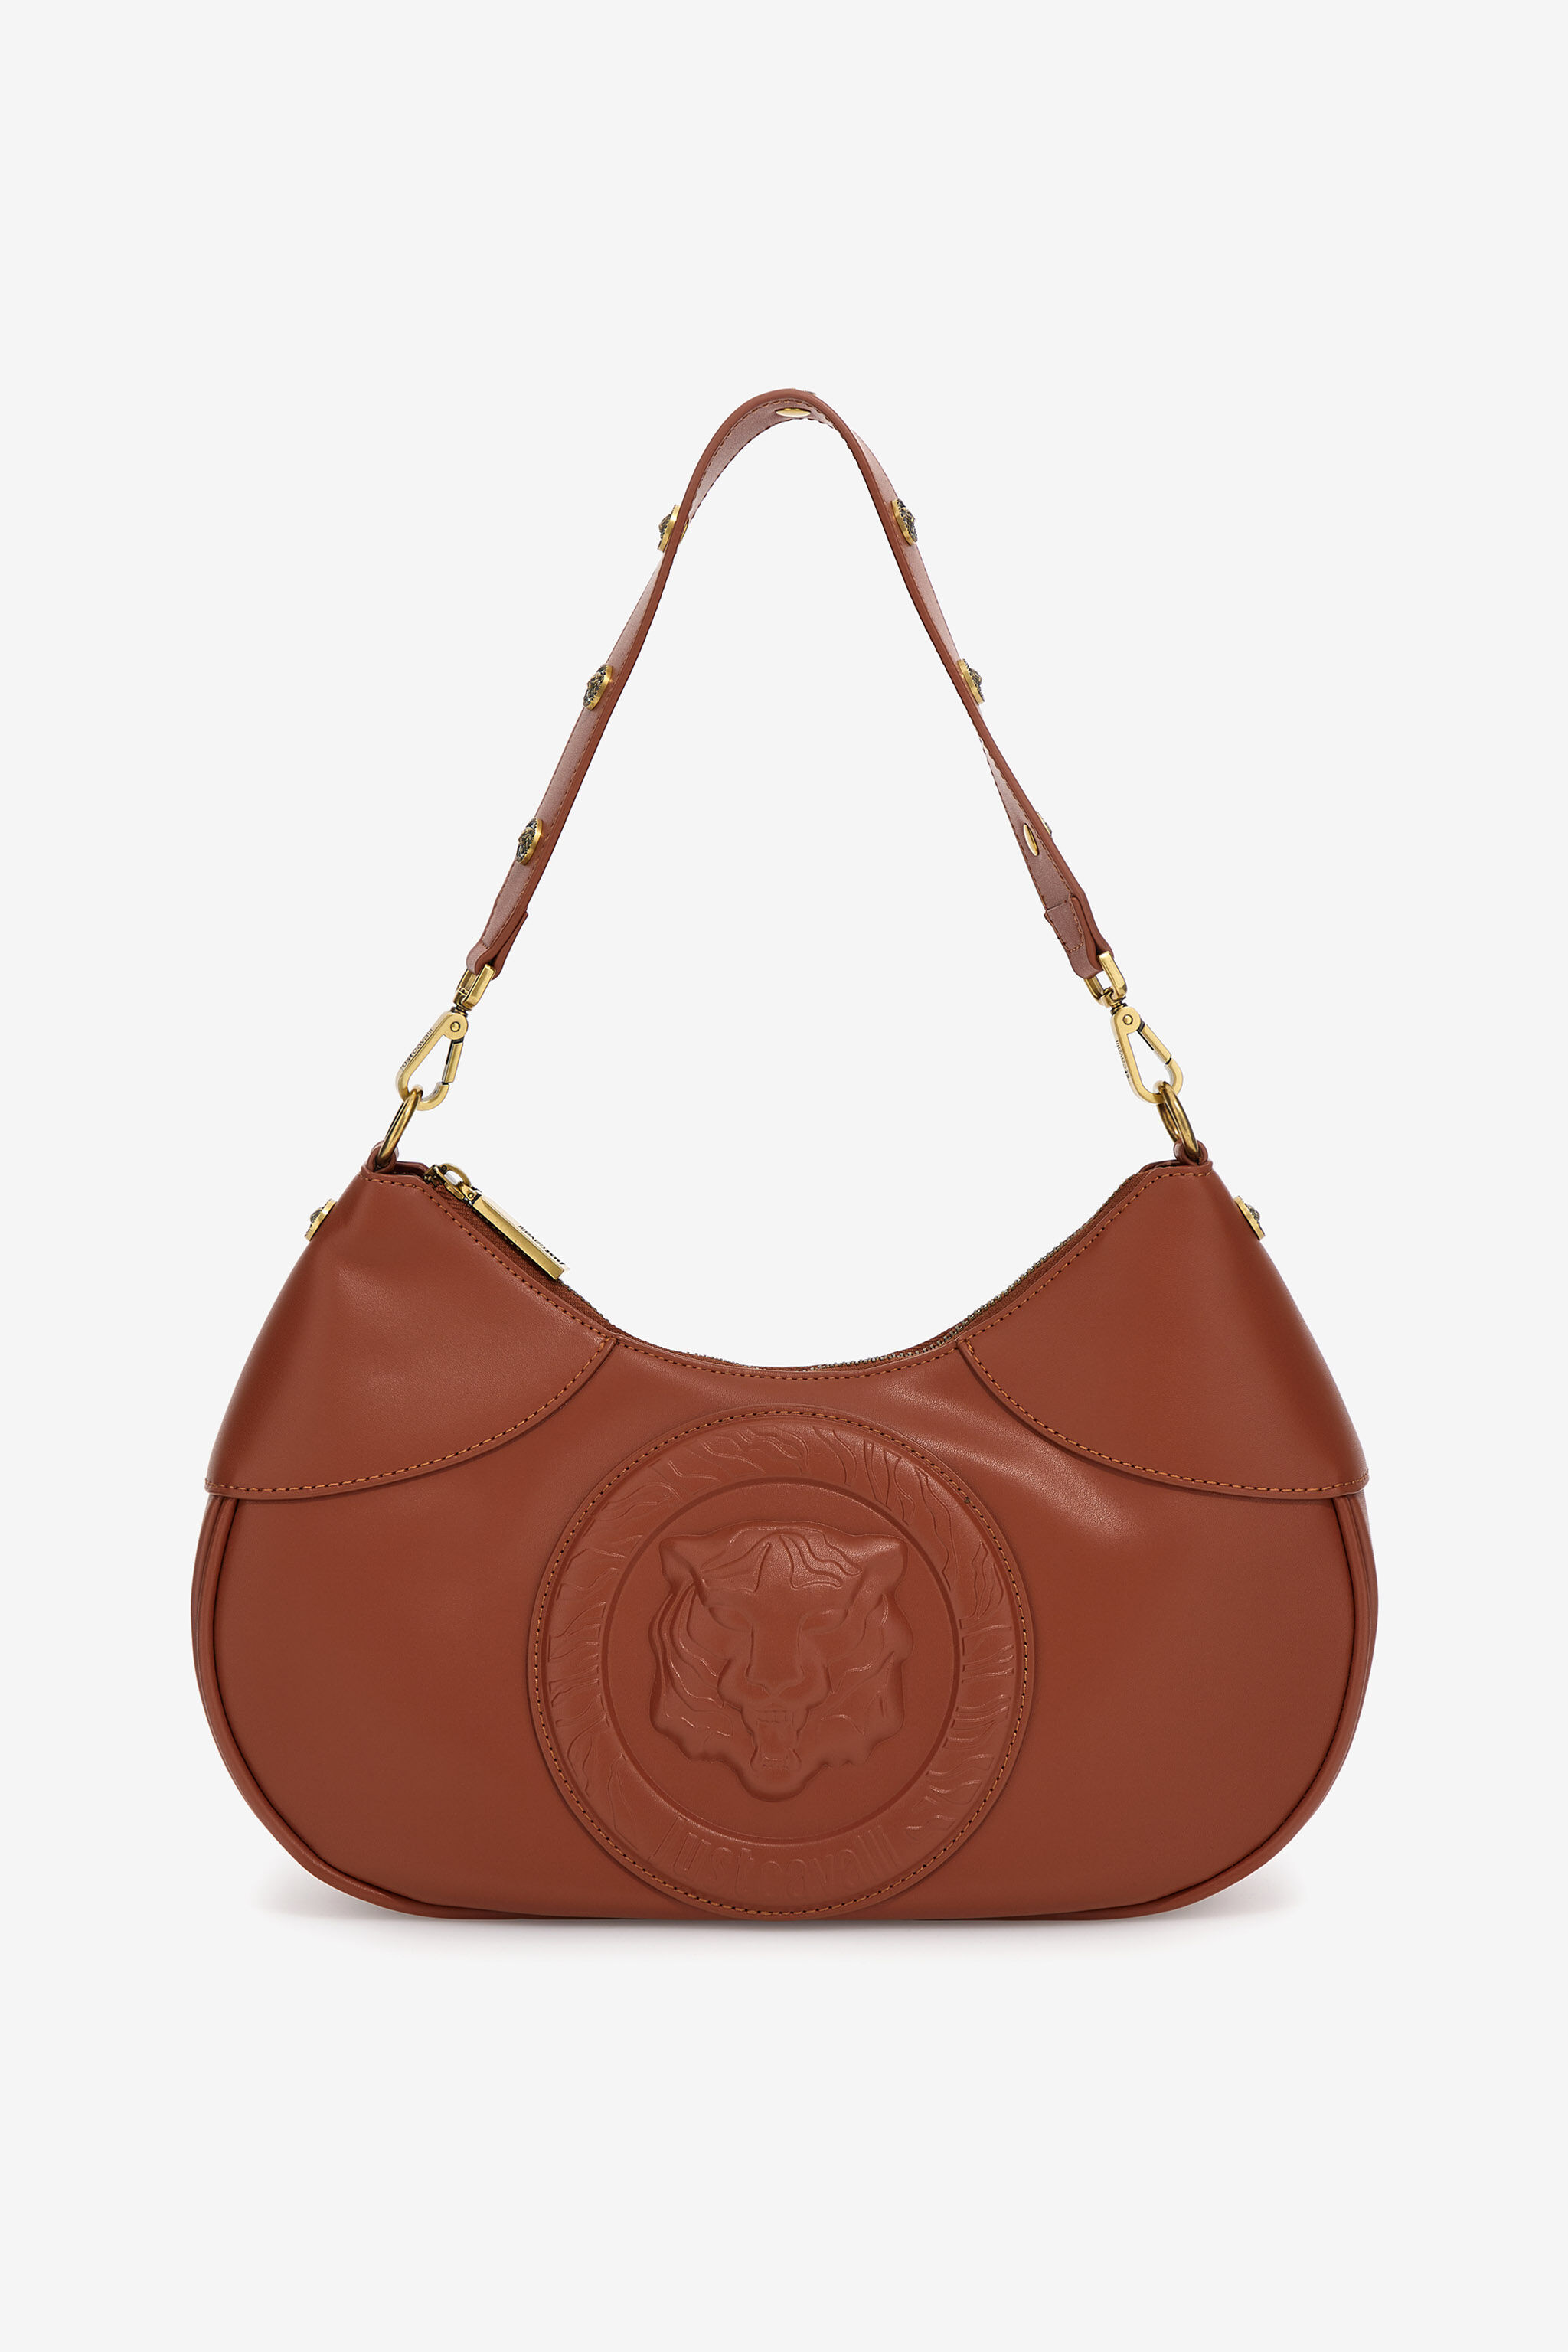 Just Cavalli Bags & Handbags for Women for sale | eBay